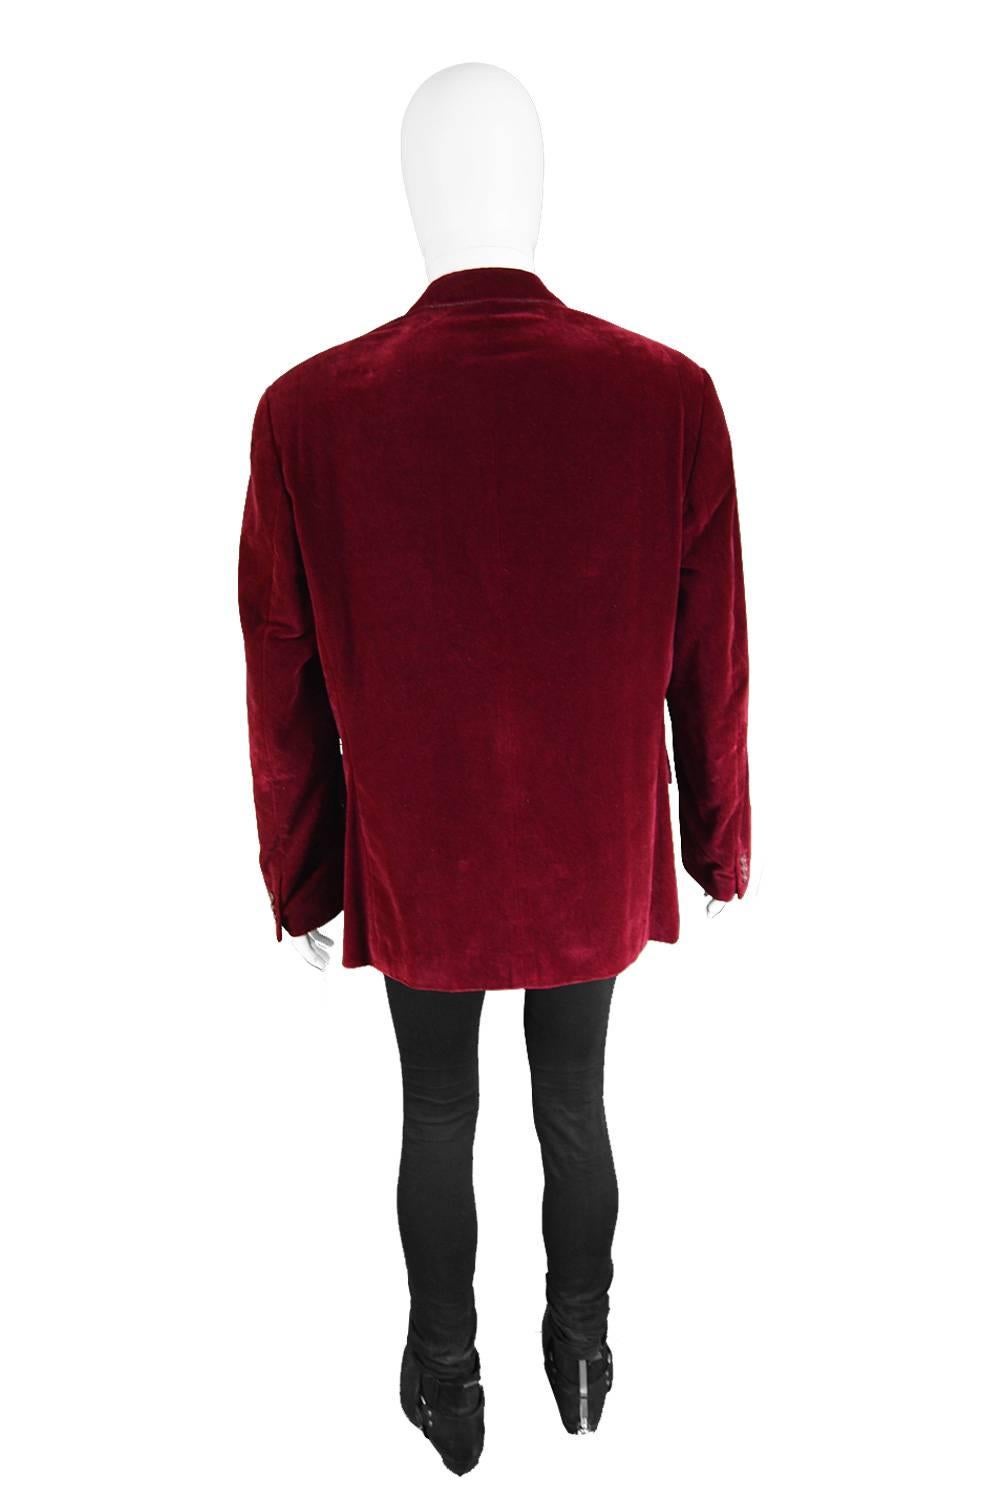 Gianni Versace Versus Men's Dark Red Velvet Vintage Blazer Jacket, 1990s For Sale 2